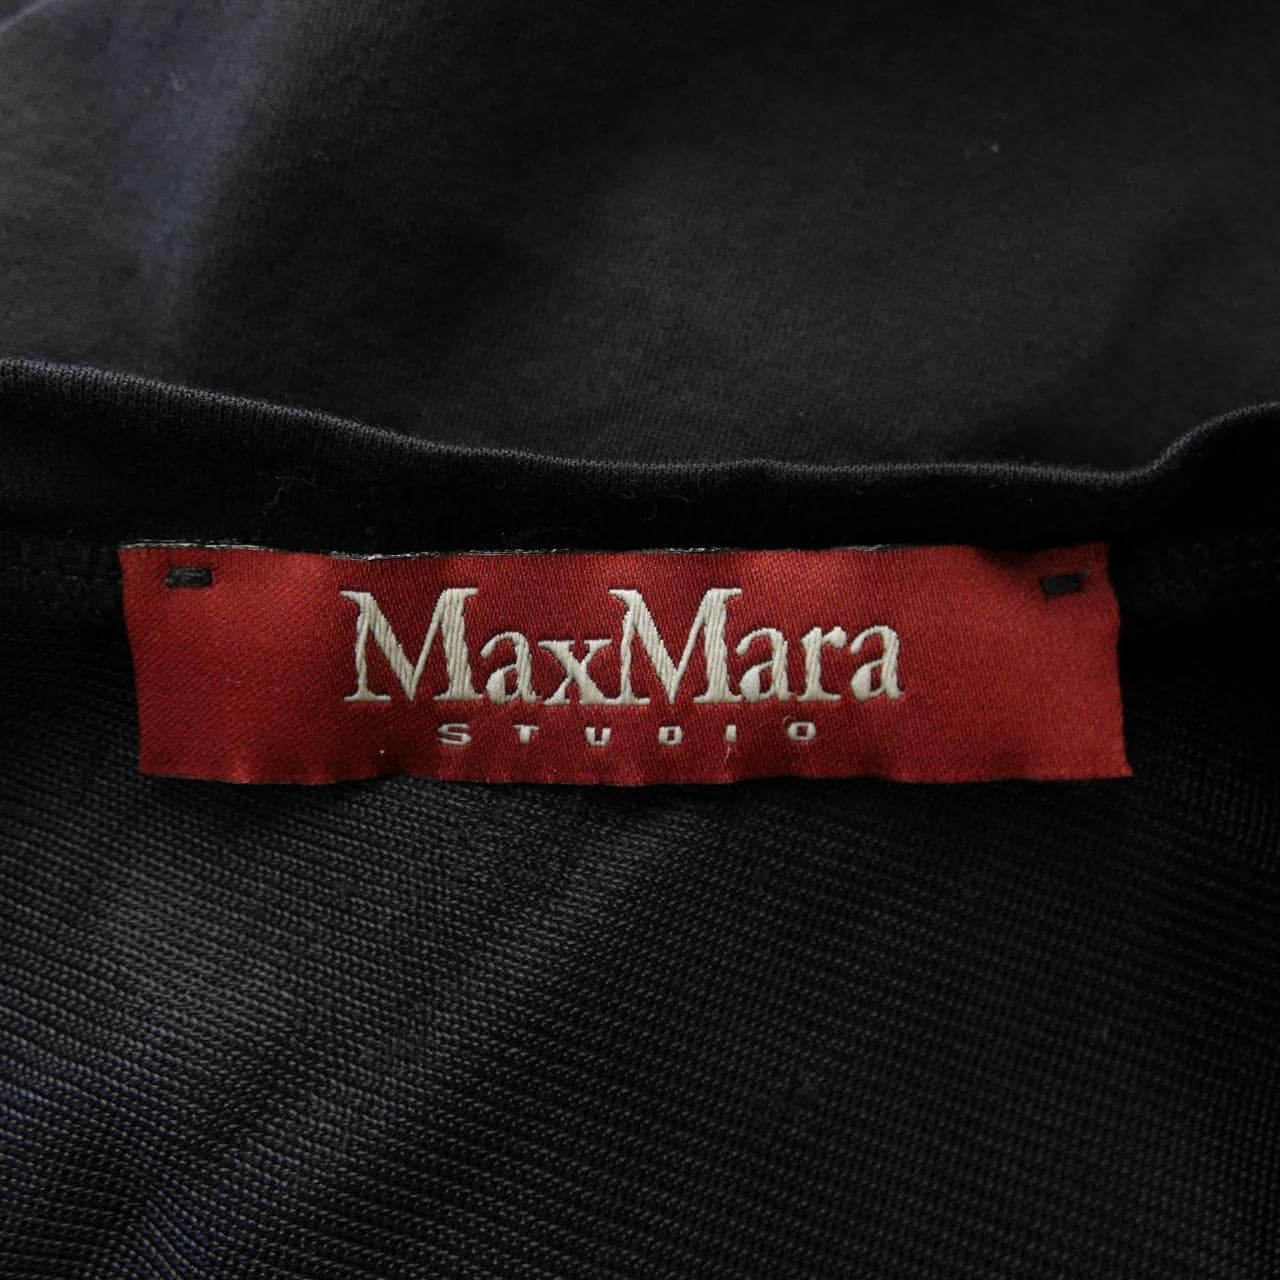 Max Mara STUDIO Mara STUDIO 上衣